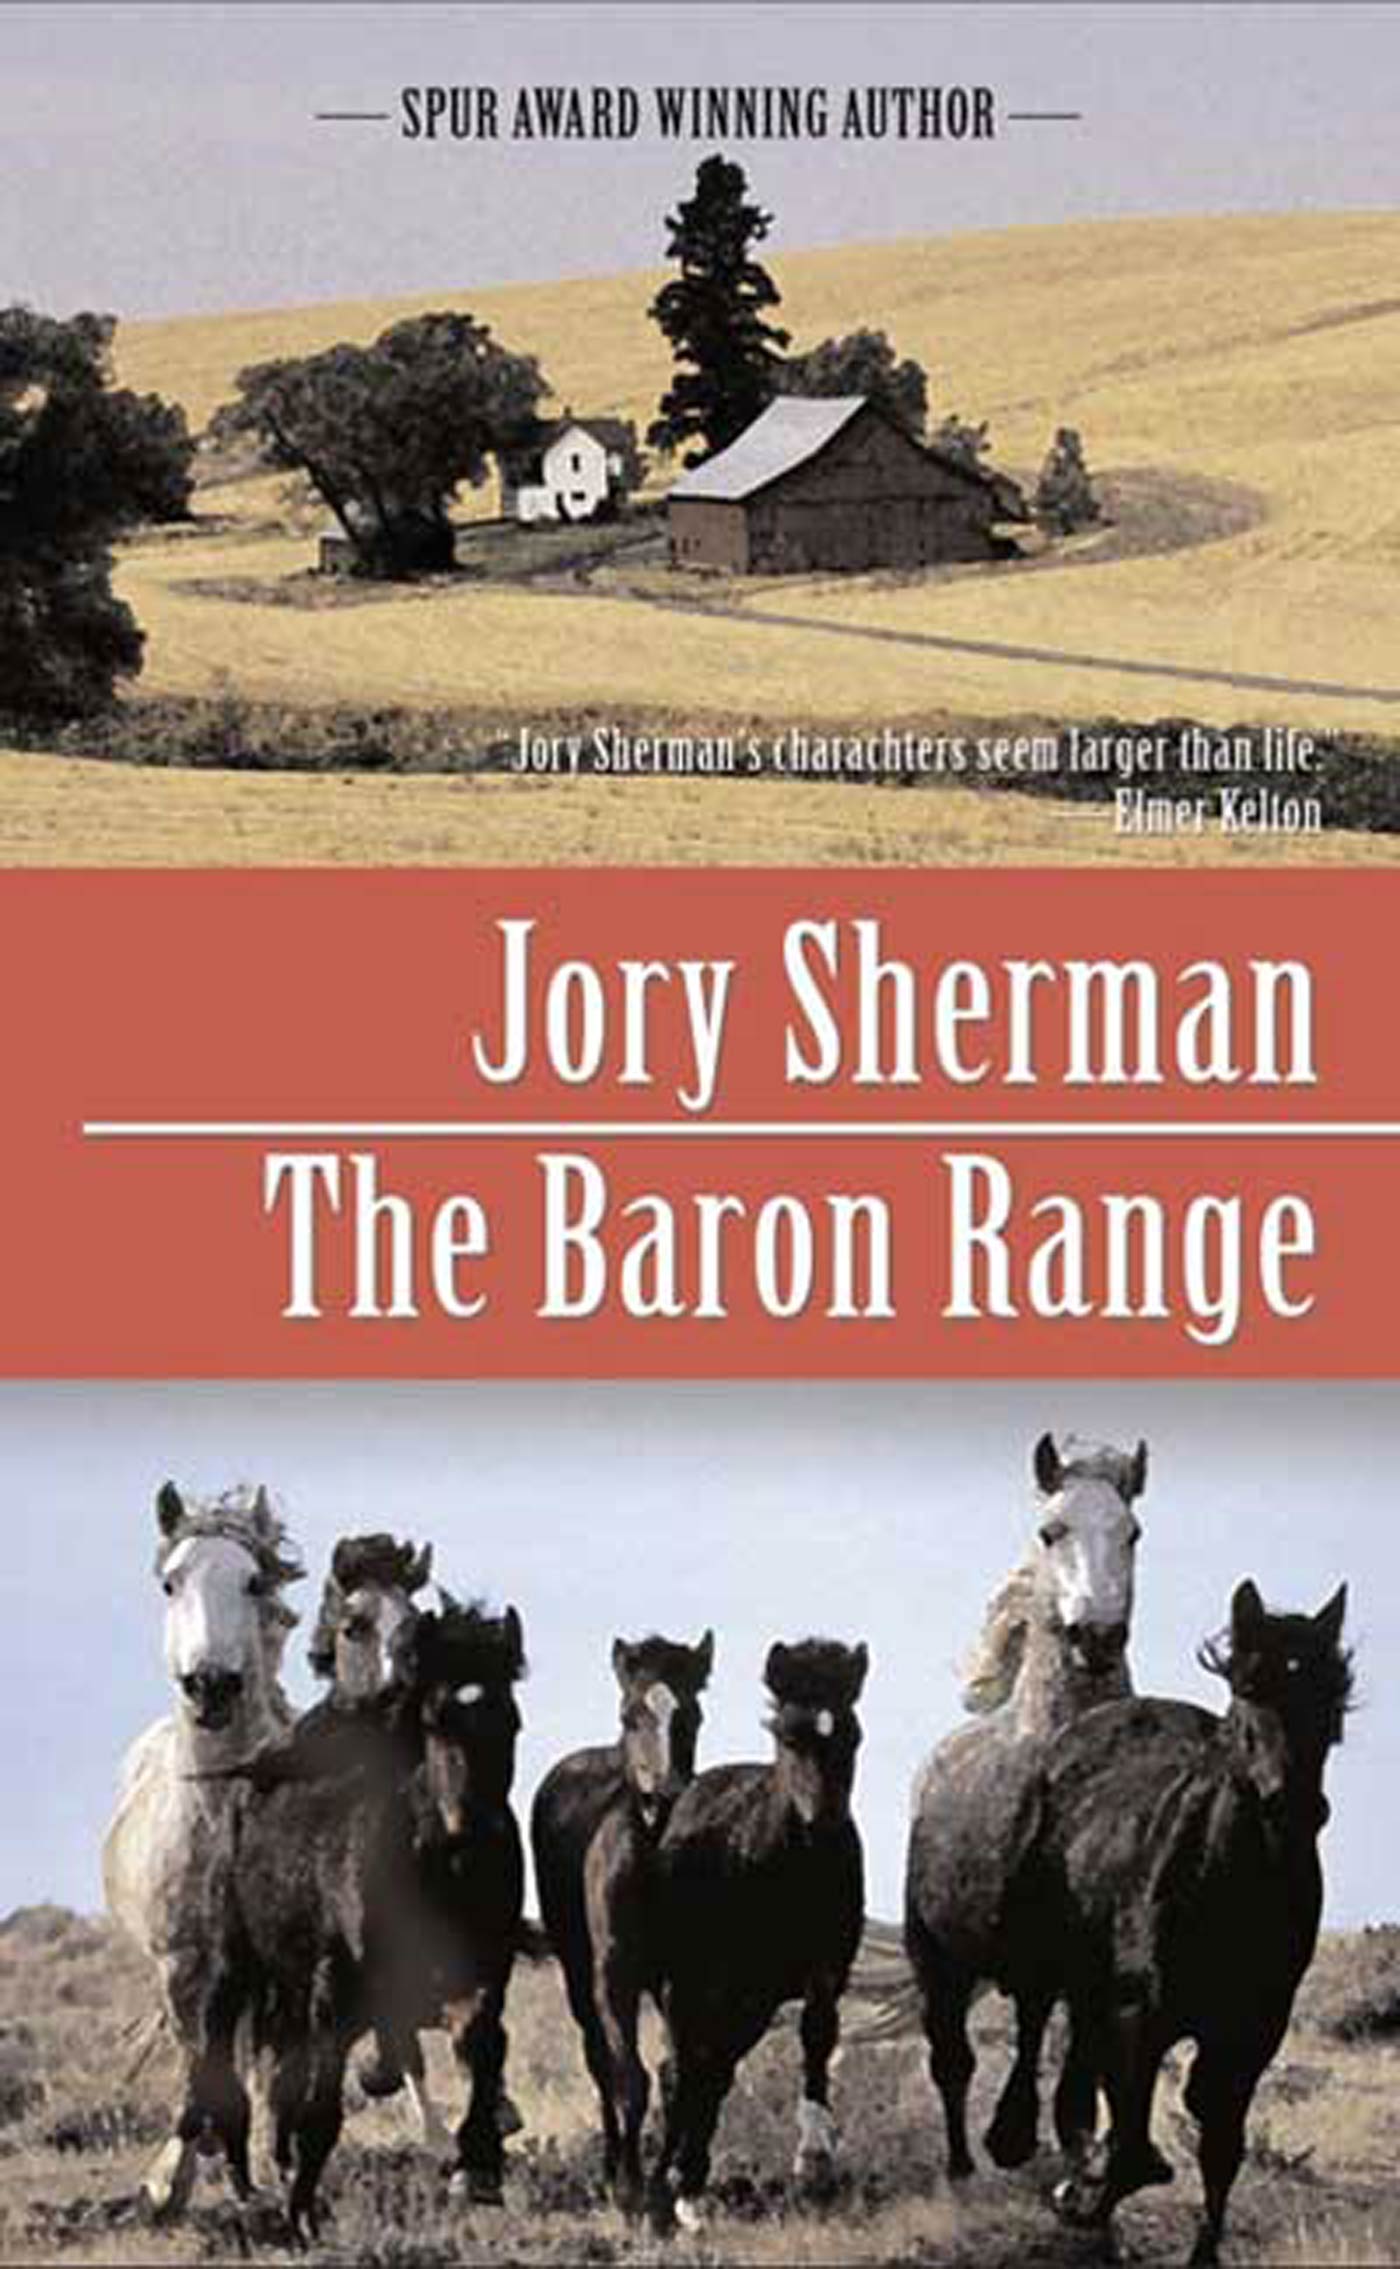 The Baron Range : A Martin Baron Novel by Jory Sherman